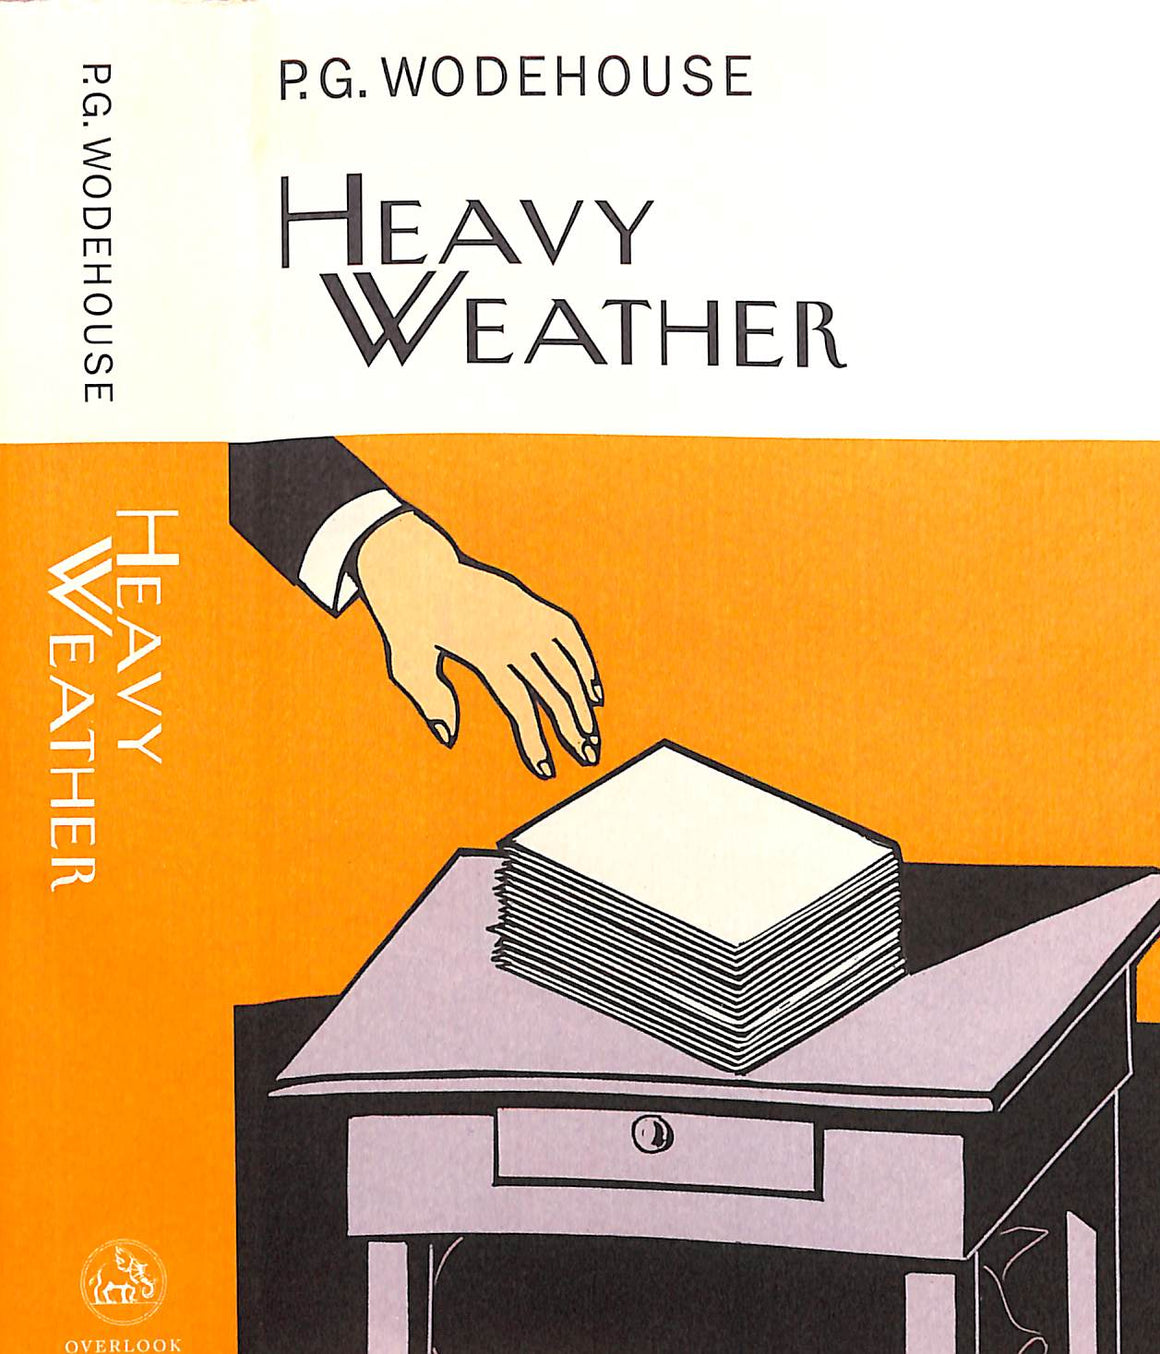 "Heavy Weather" 2001 WODEHOUSE, P.G.